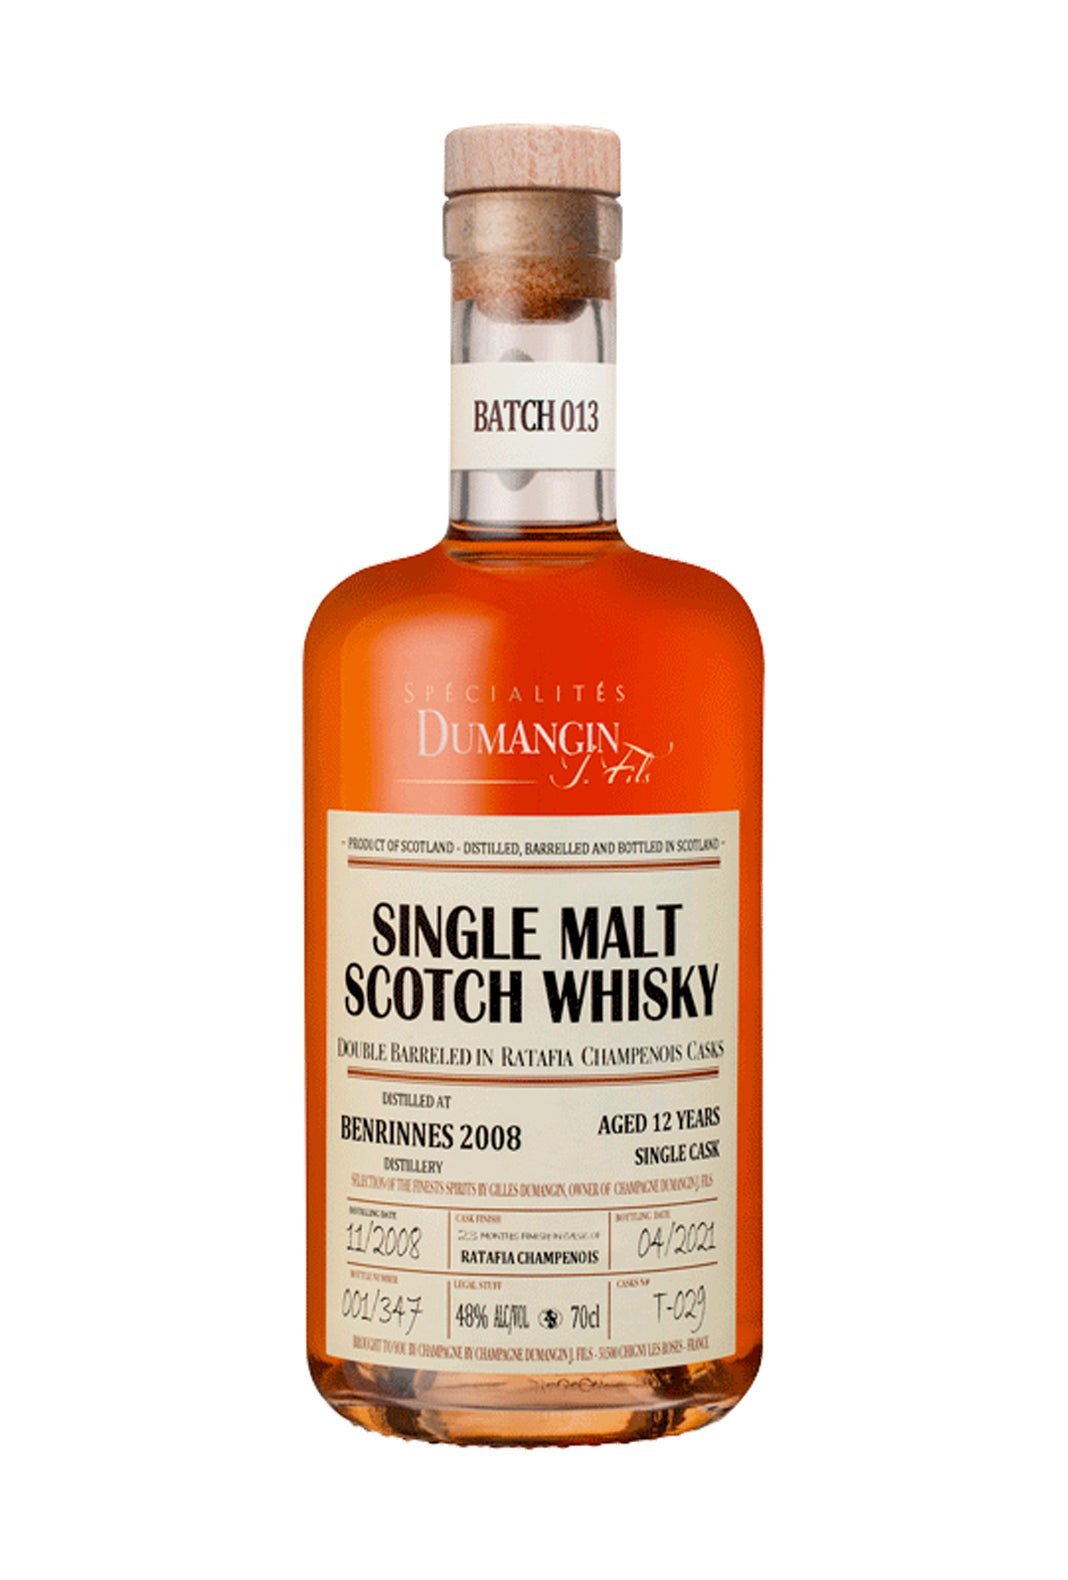 Dumangin Batch 013 Benrinnes (Scotland) 2008 Single Malt Whisky 48% 700ml | Whiskey | Shop online at Spirits of France